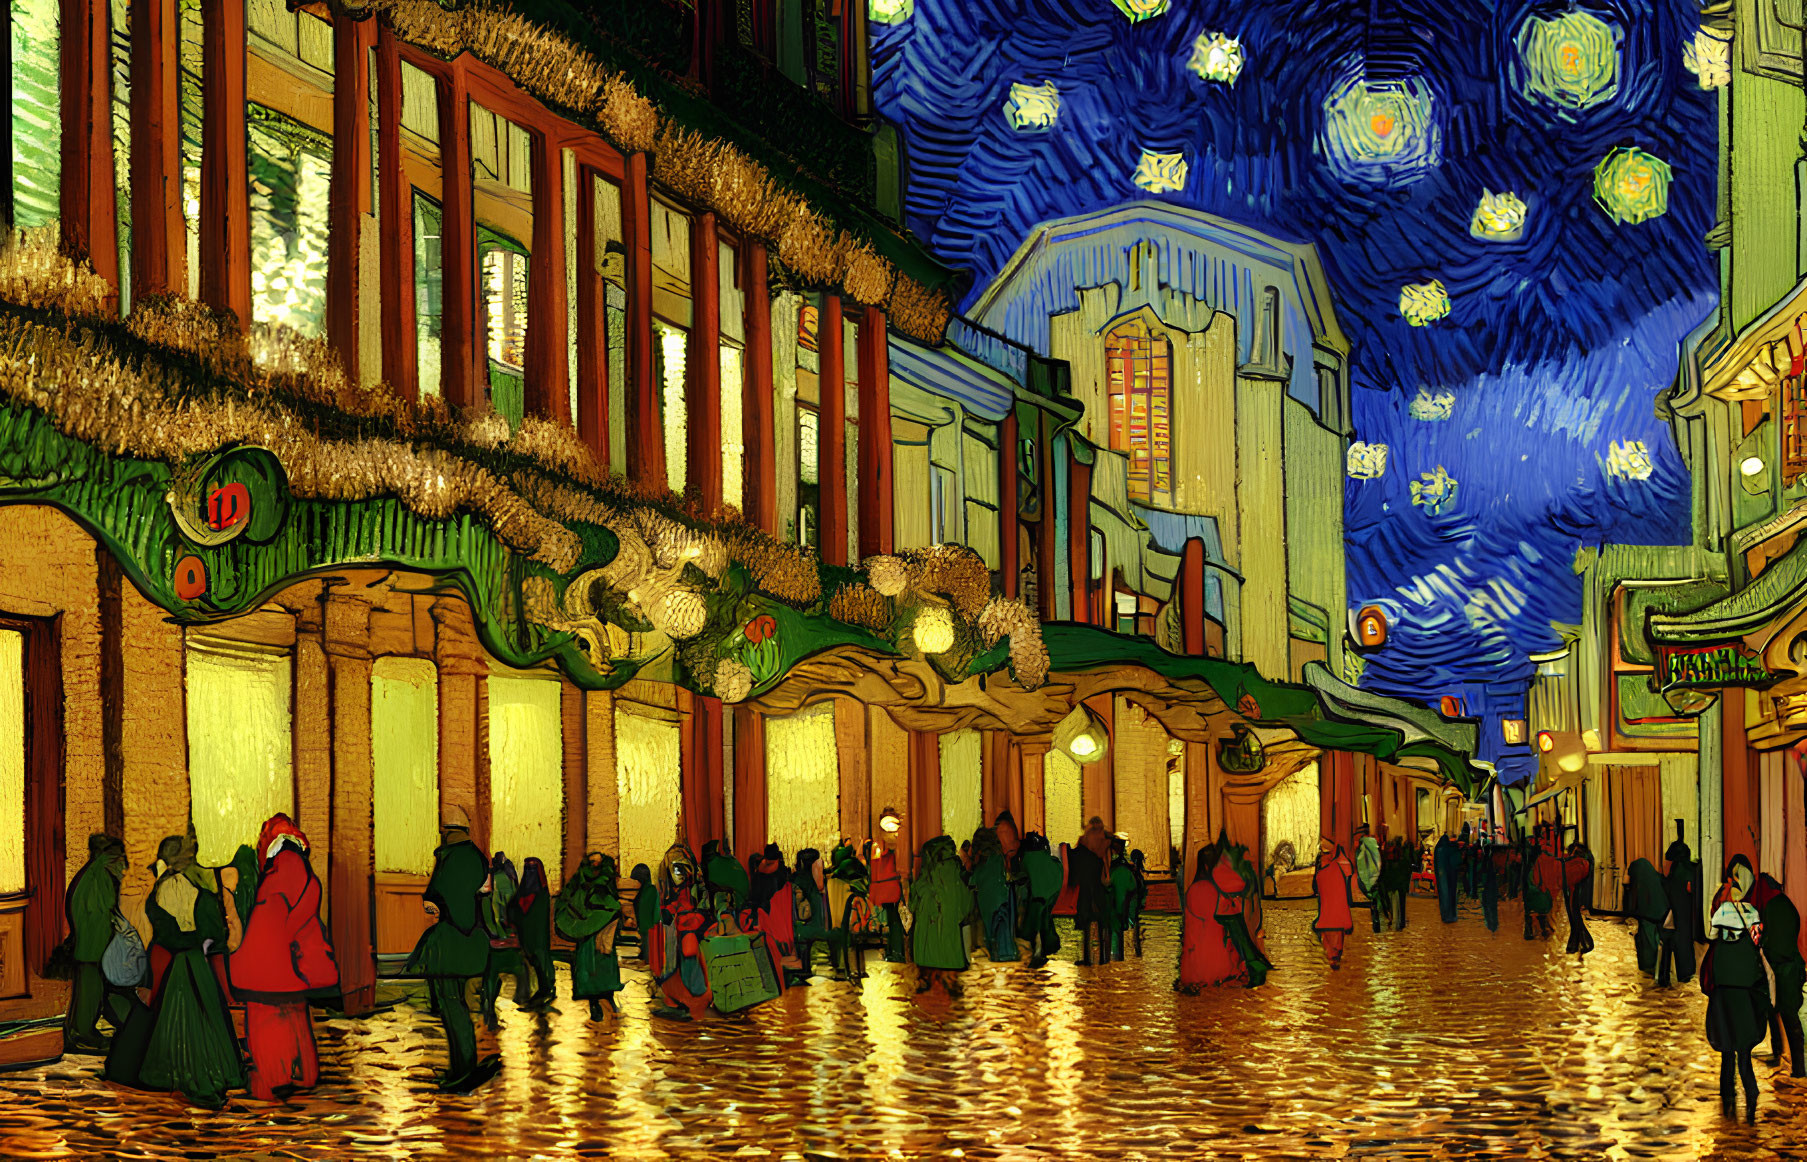 Vibrant Van Gogh-inspired street scene at night with starry sky.